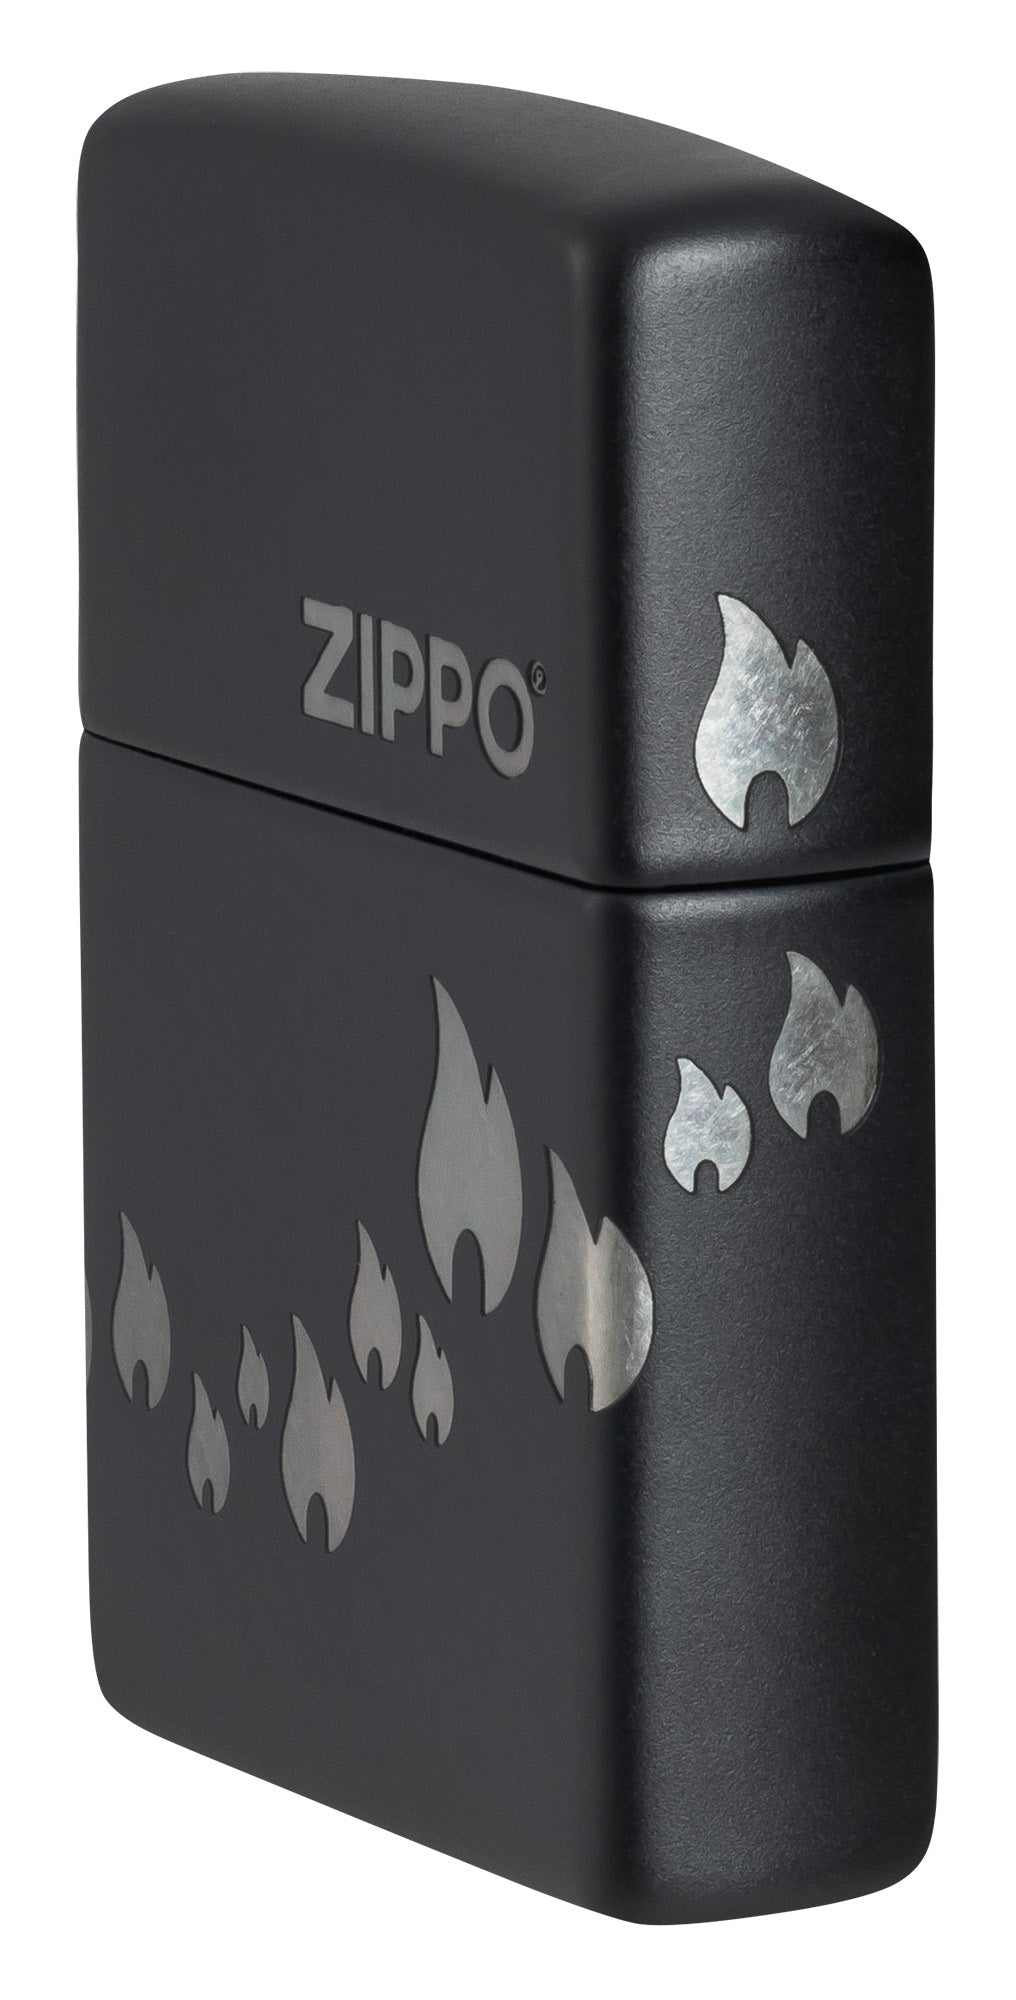 Zippo Lighter: Zippo Flames, Laser 360 - Black Matte 48980